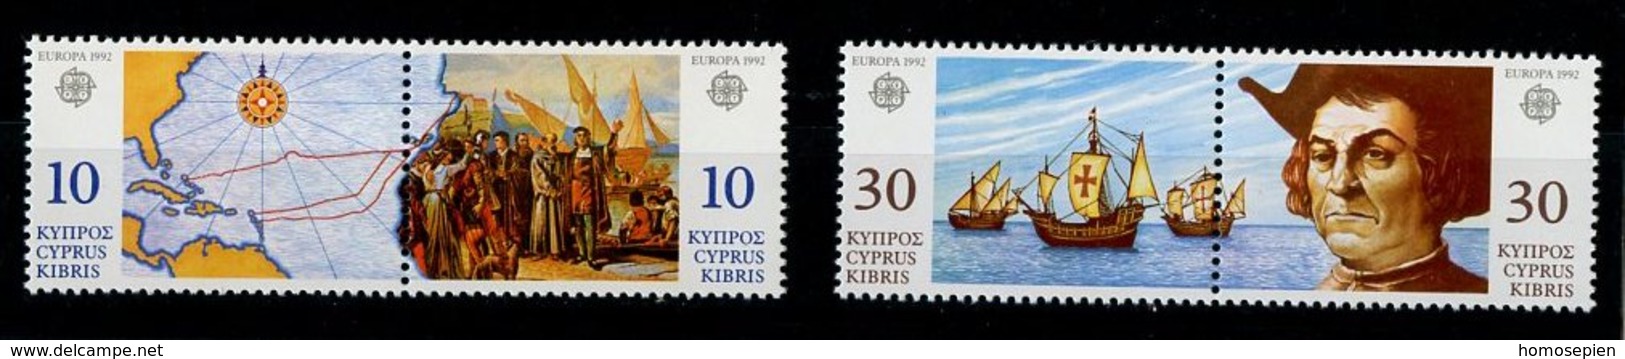 Chypre - Cyprus - Zypern 1992 Y&T N°790 à 793 - Michel N°790 à 793 *** - EUROPA - Par Paires - Unused Stamps